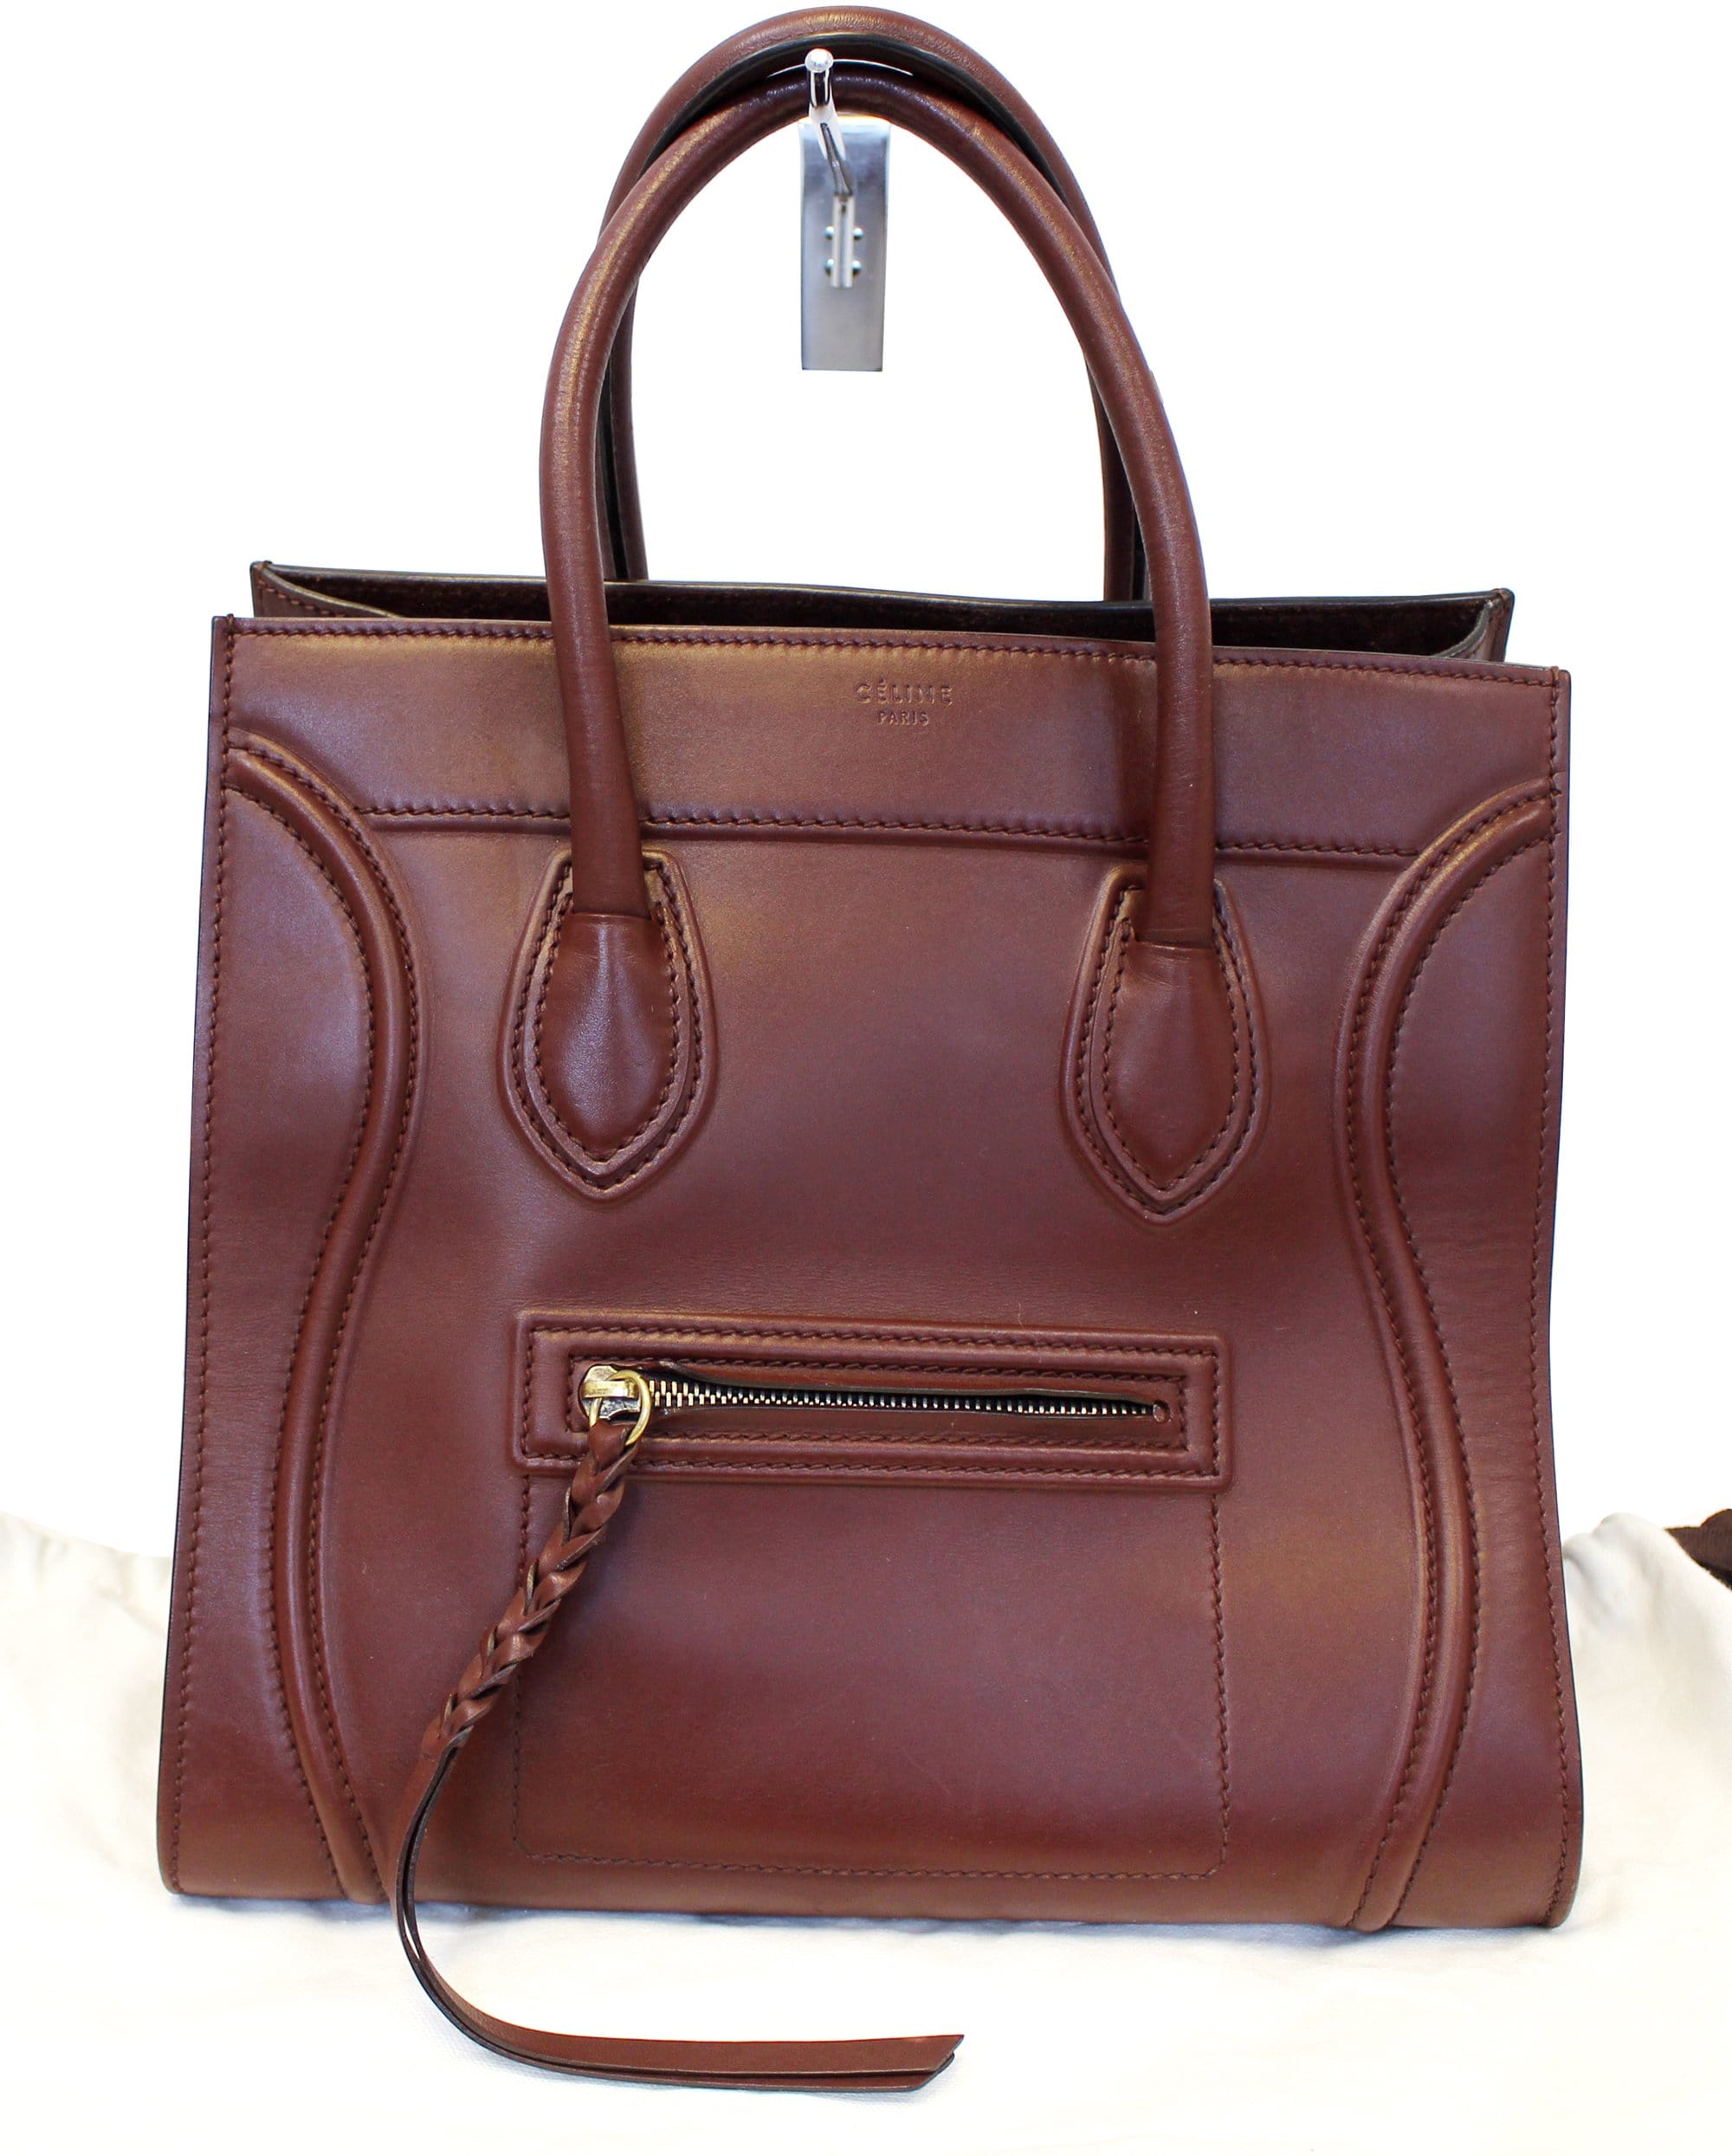 Celine Paris Medium Shoppers Bag